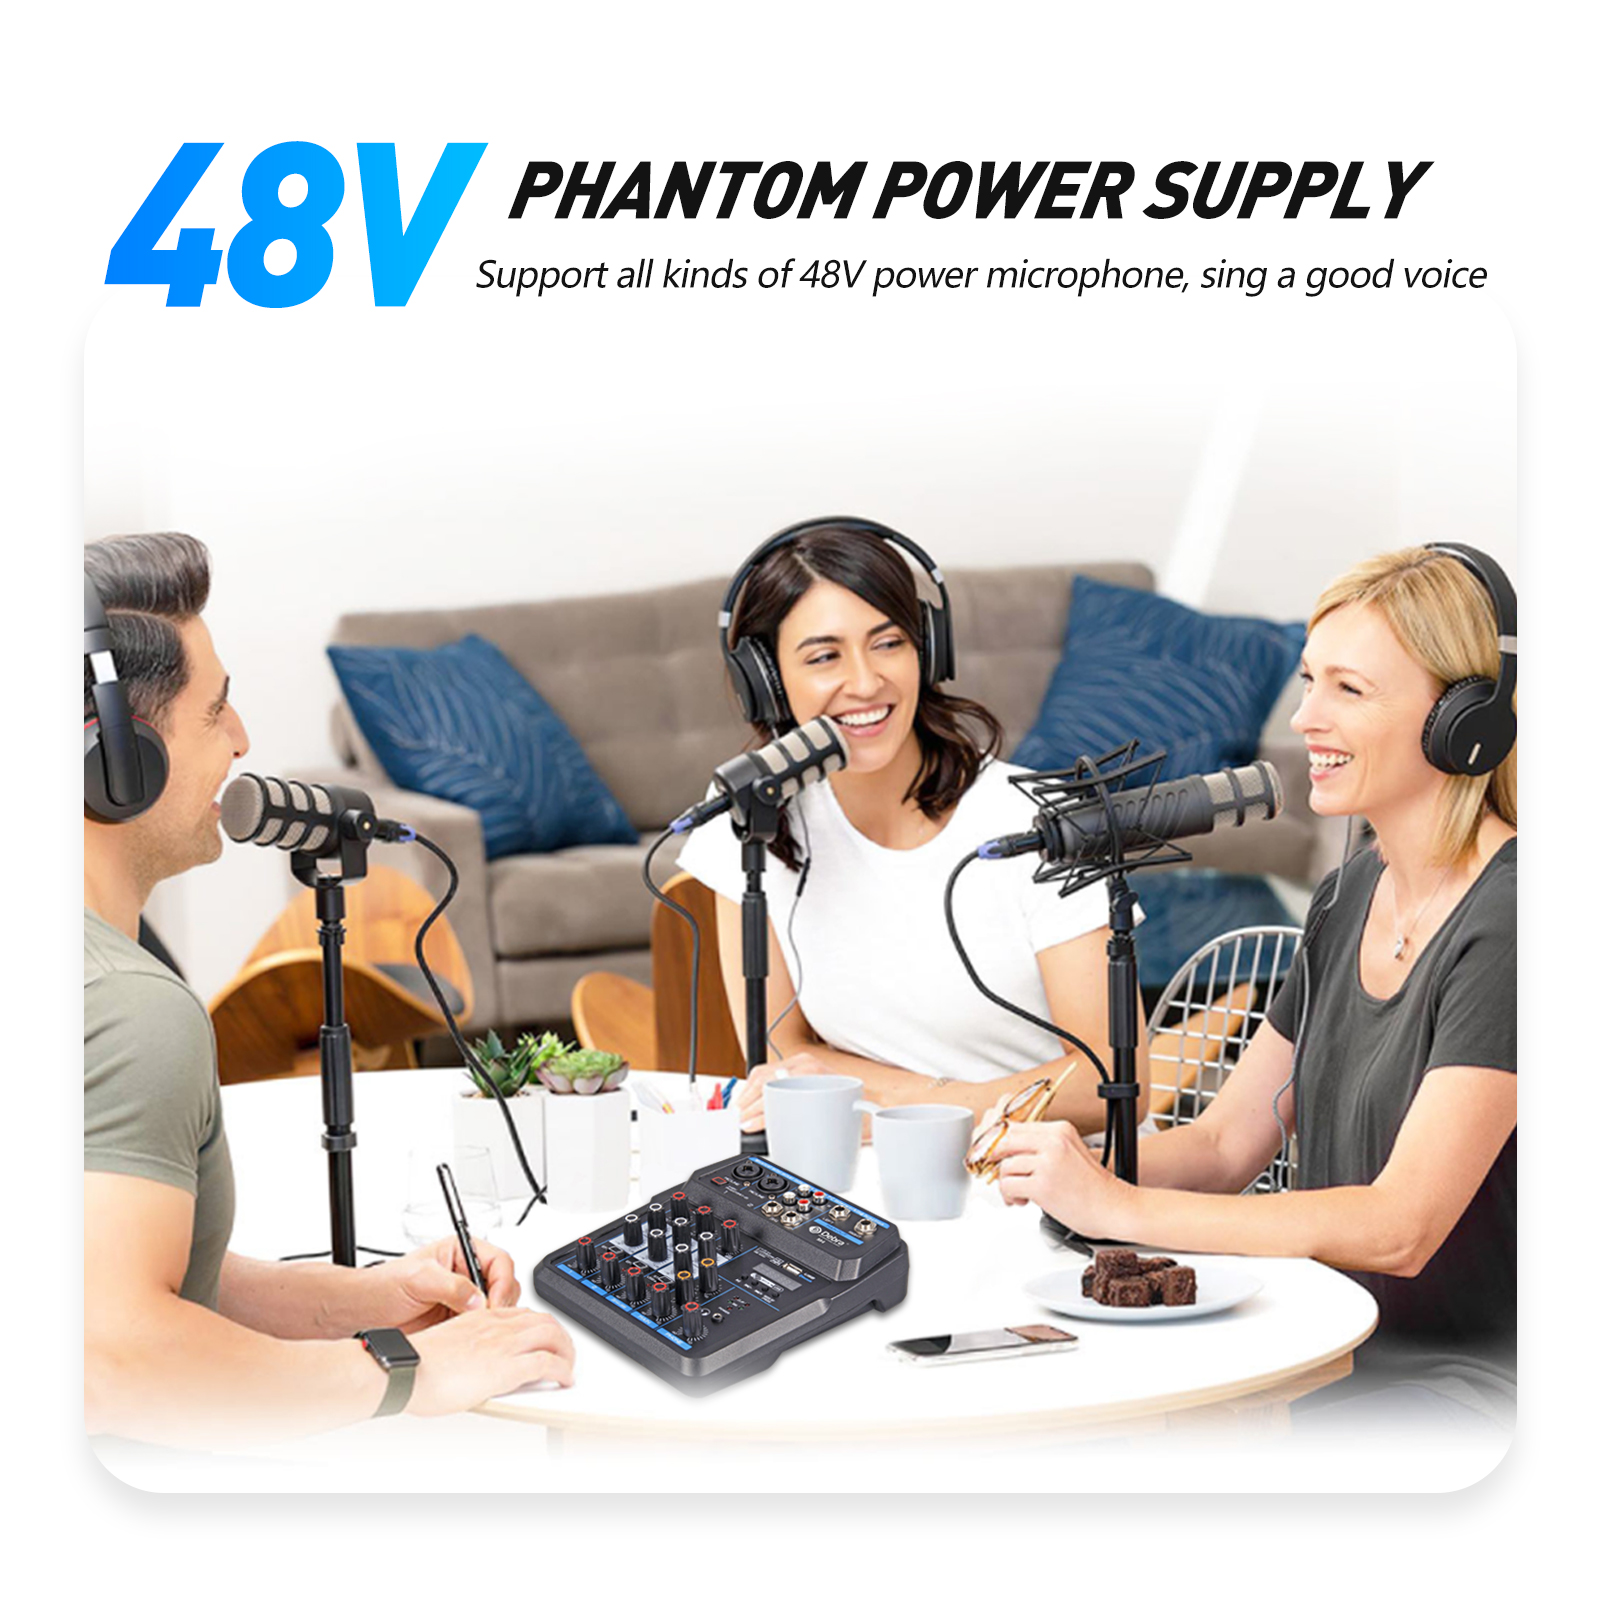 Provide 48V power supply